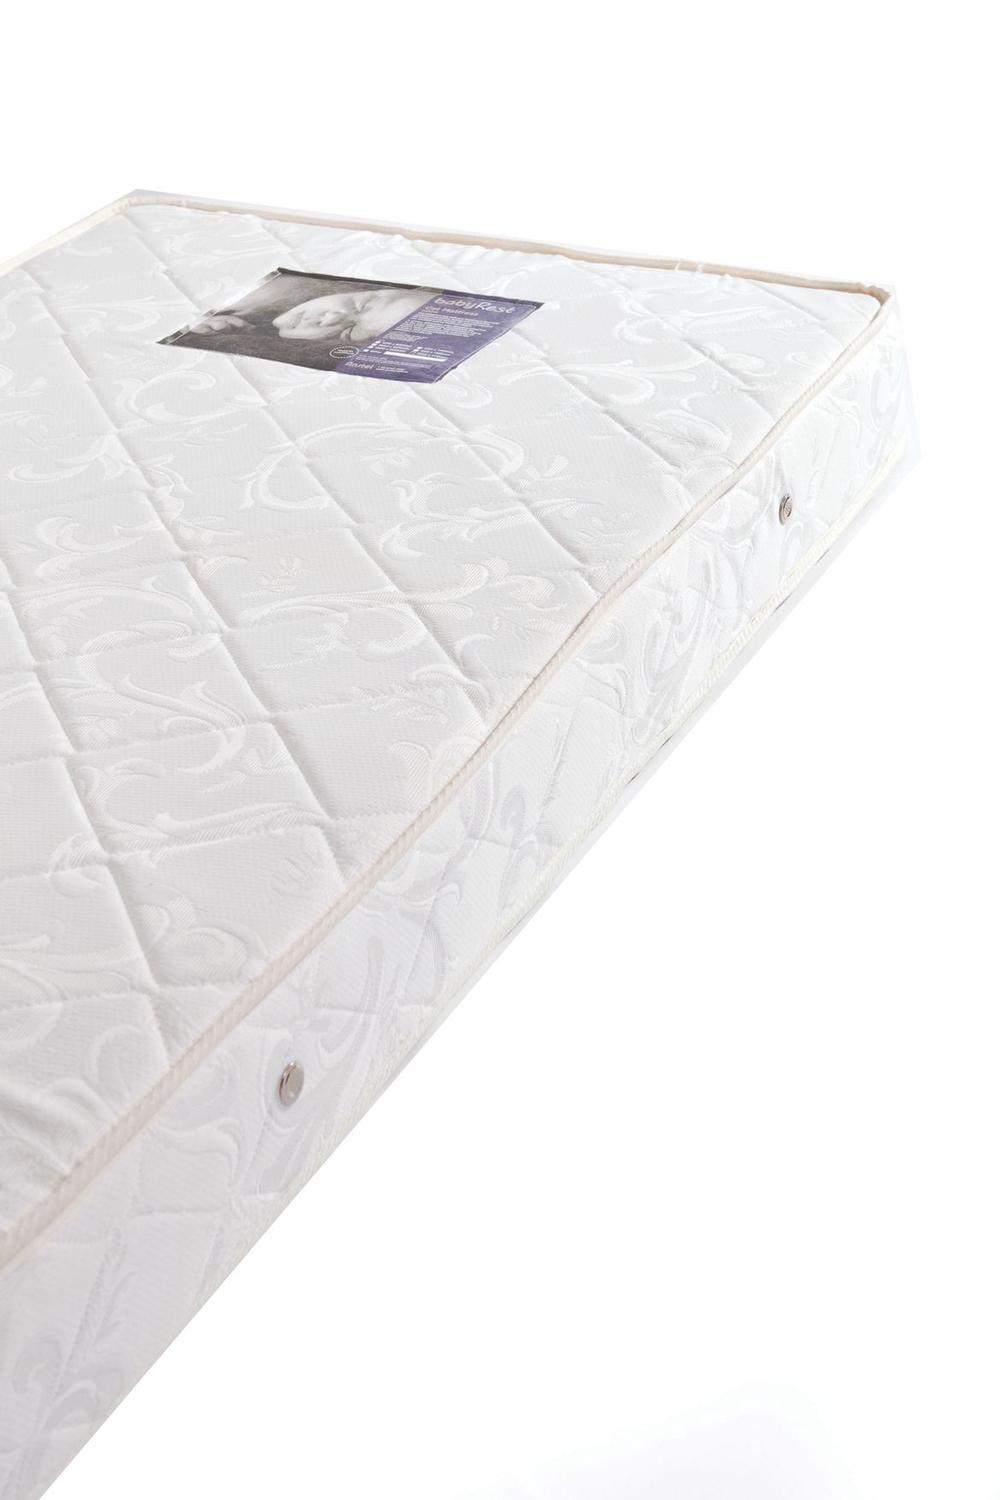 babyrest cot mattress